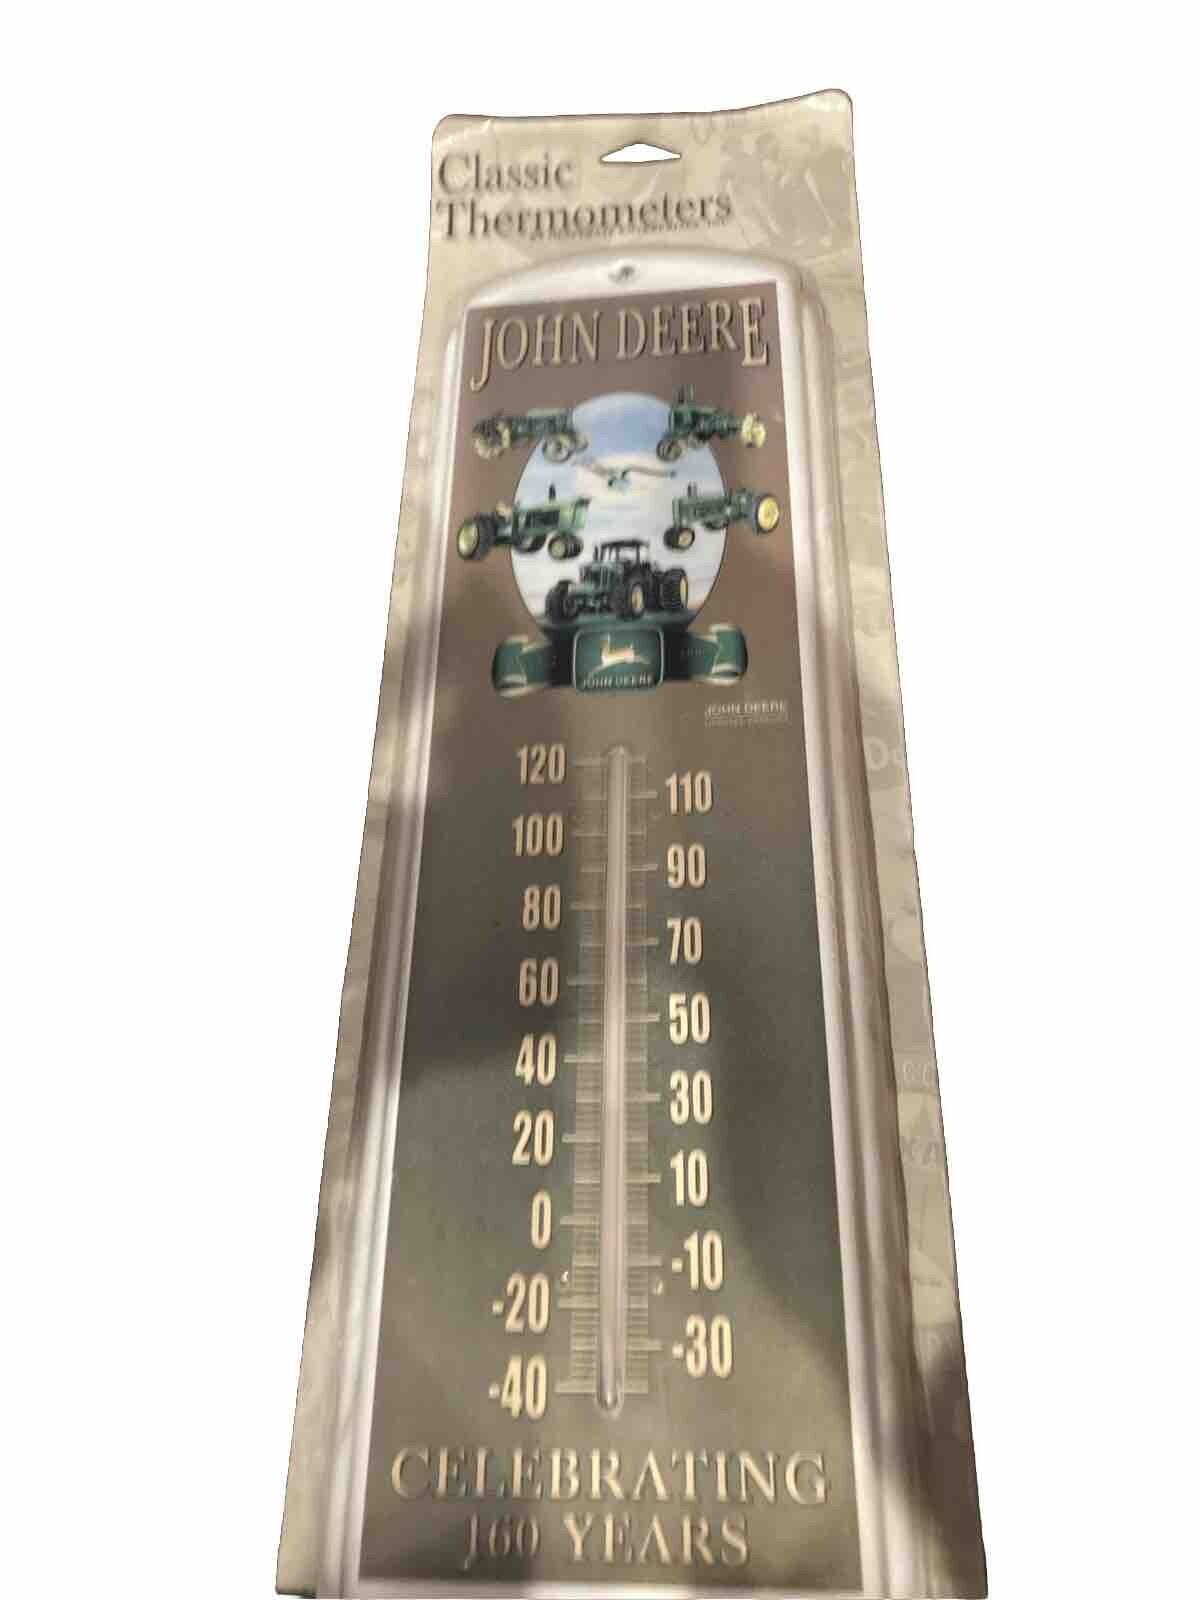 John Deere Classic Thermometer Celebrating 160 Years (17\